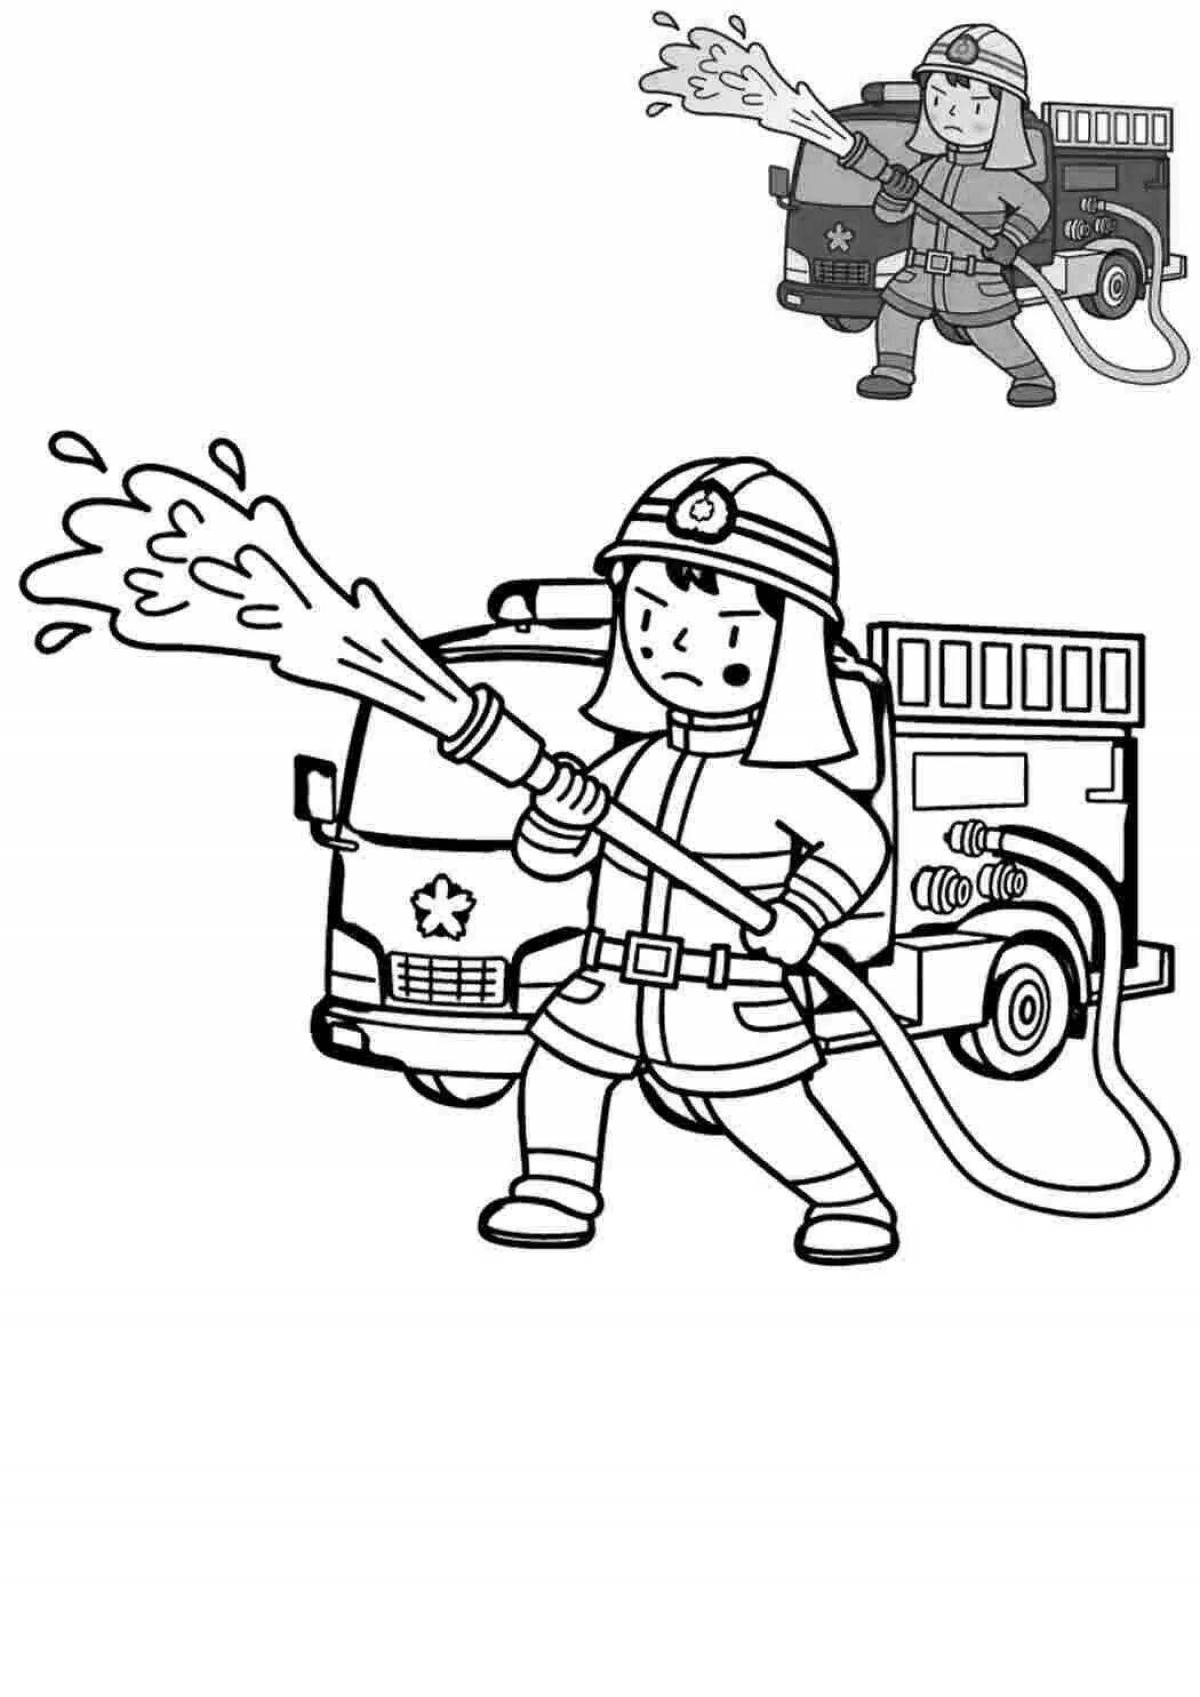 Incredible fireman coloring book for kids